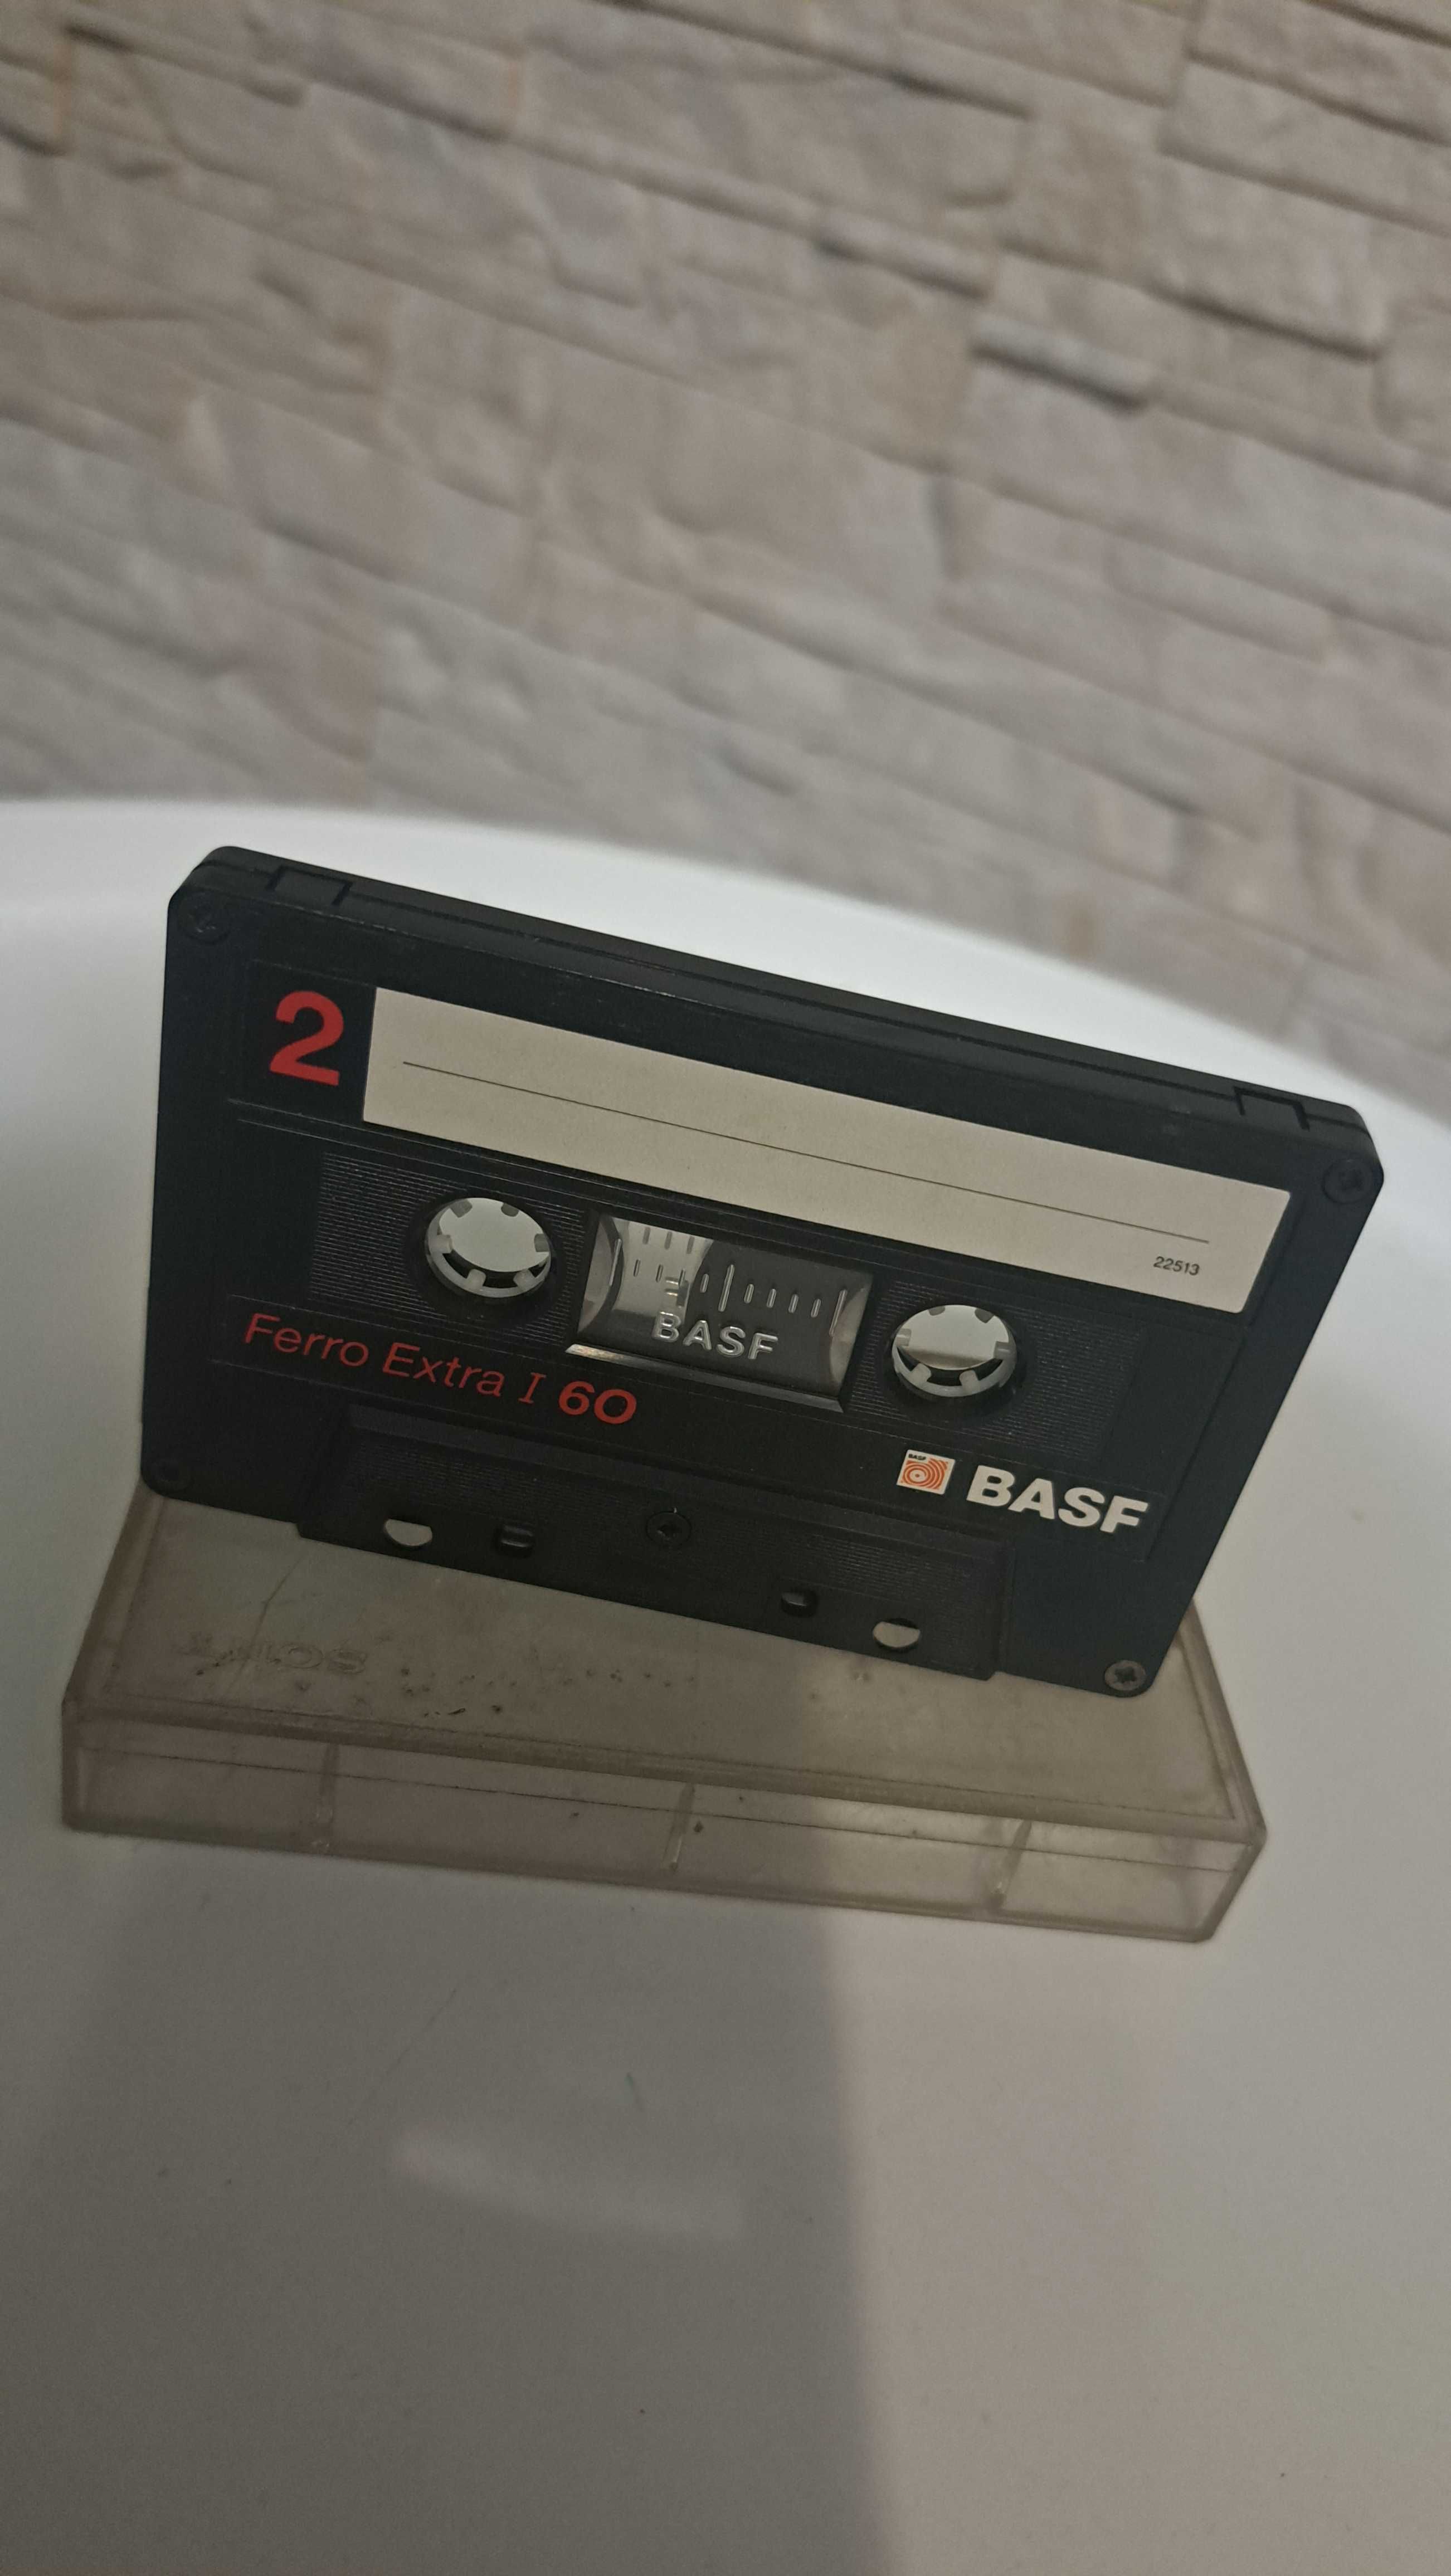 Ferro Extra I 60 BASF kaseta audio nośnik